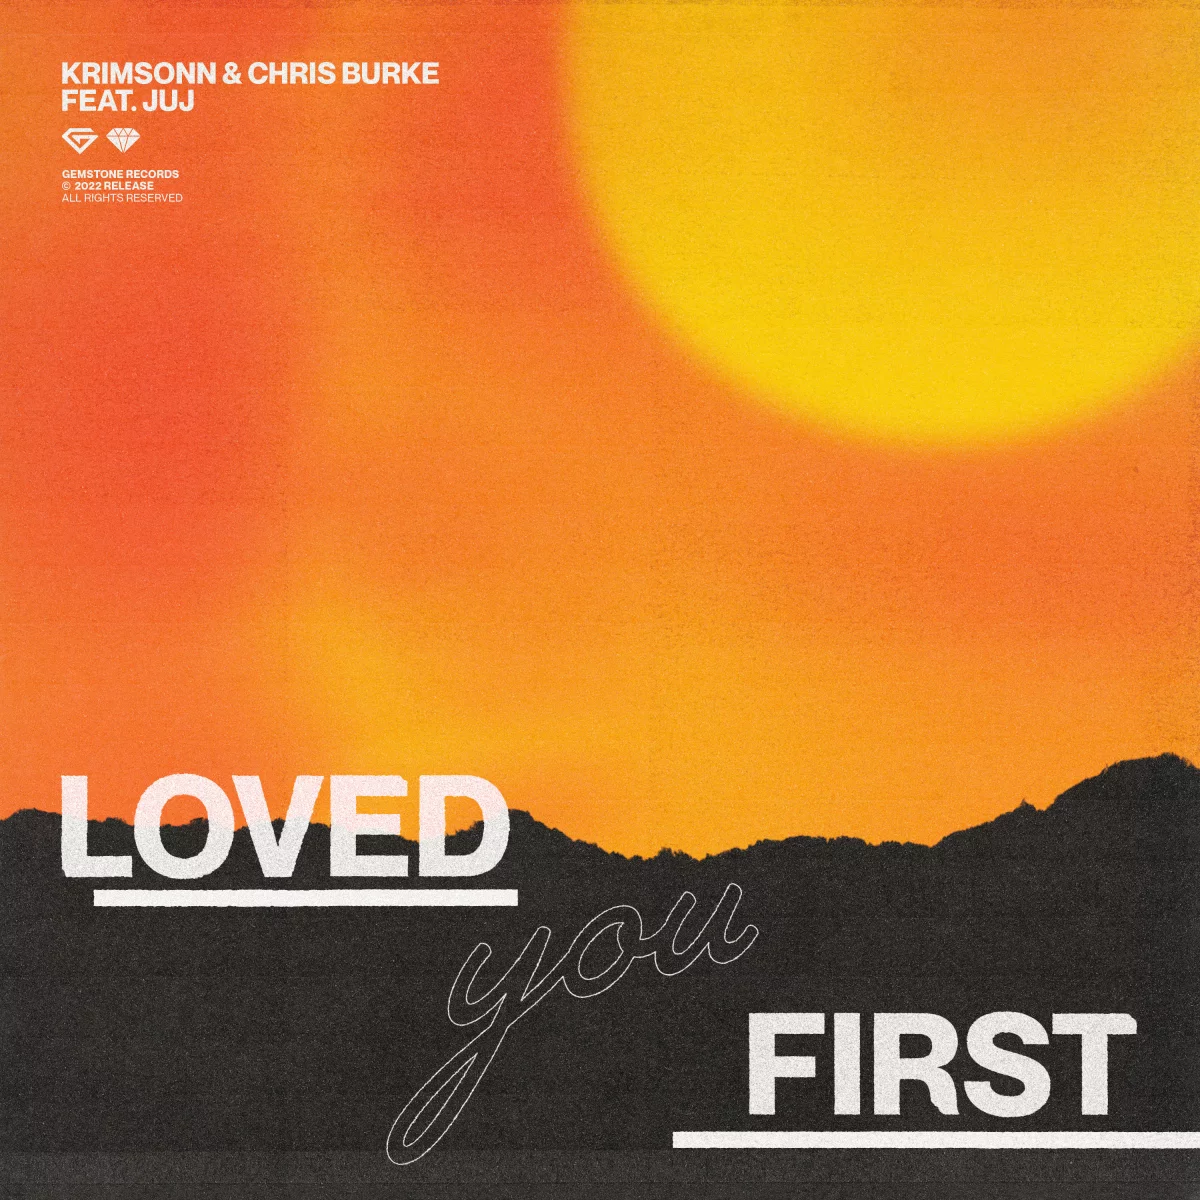 Loved You First - Krimsonn⁠ ⁠& Chris Burke⁠ feat. JUJ⁠⁠ 